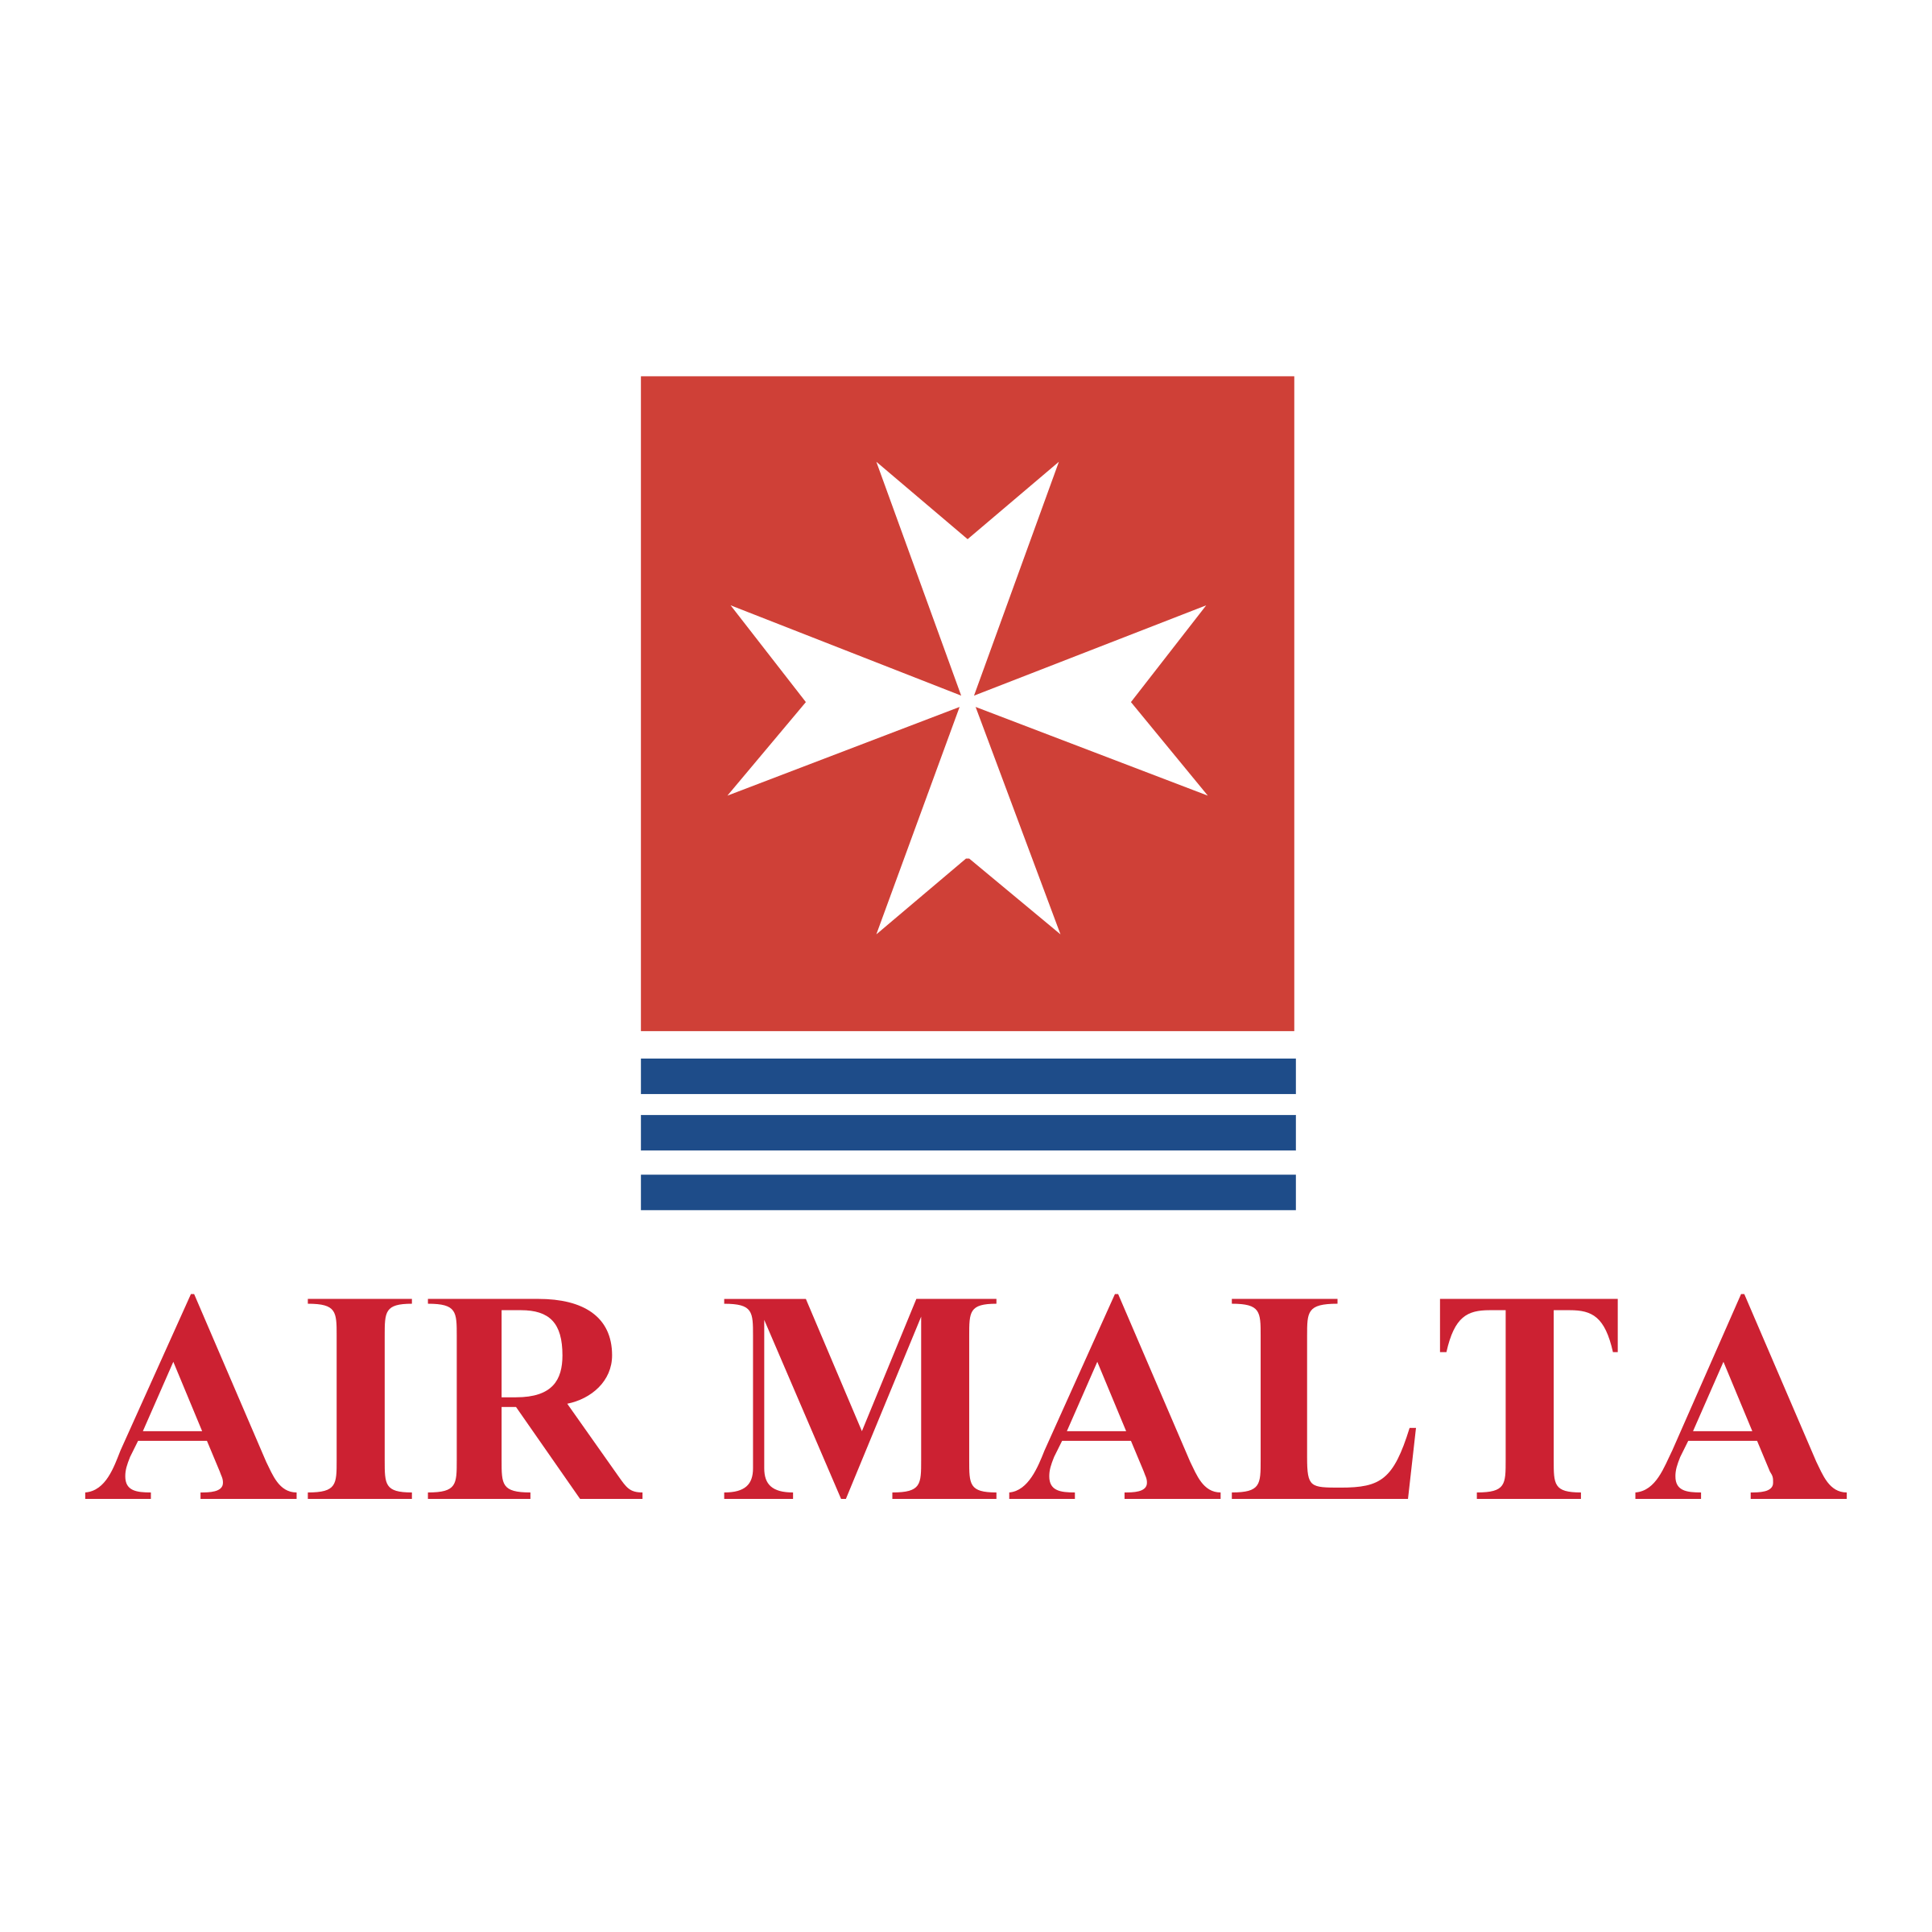 Malta Logo - Air Malta Logo PNG Transparent & SVG Vector - Freebie Supply